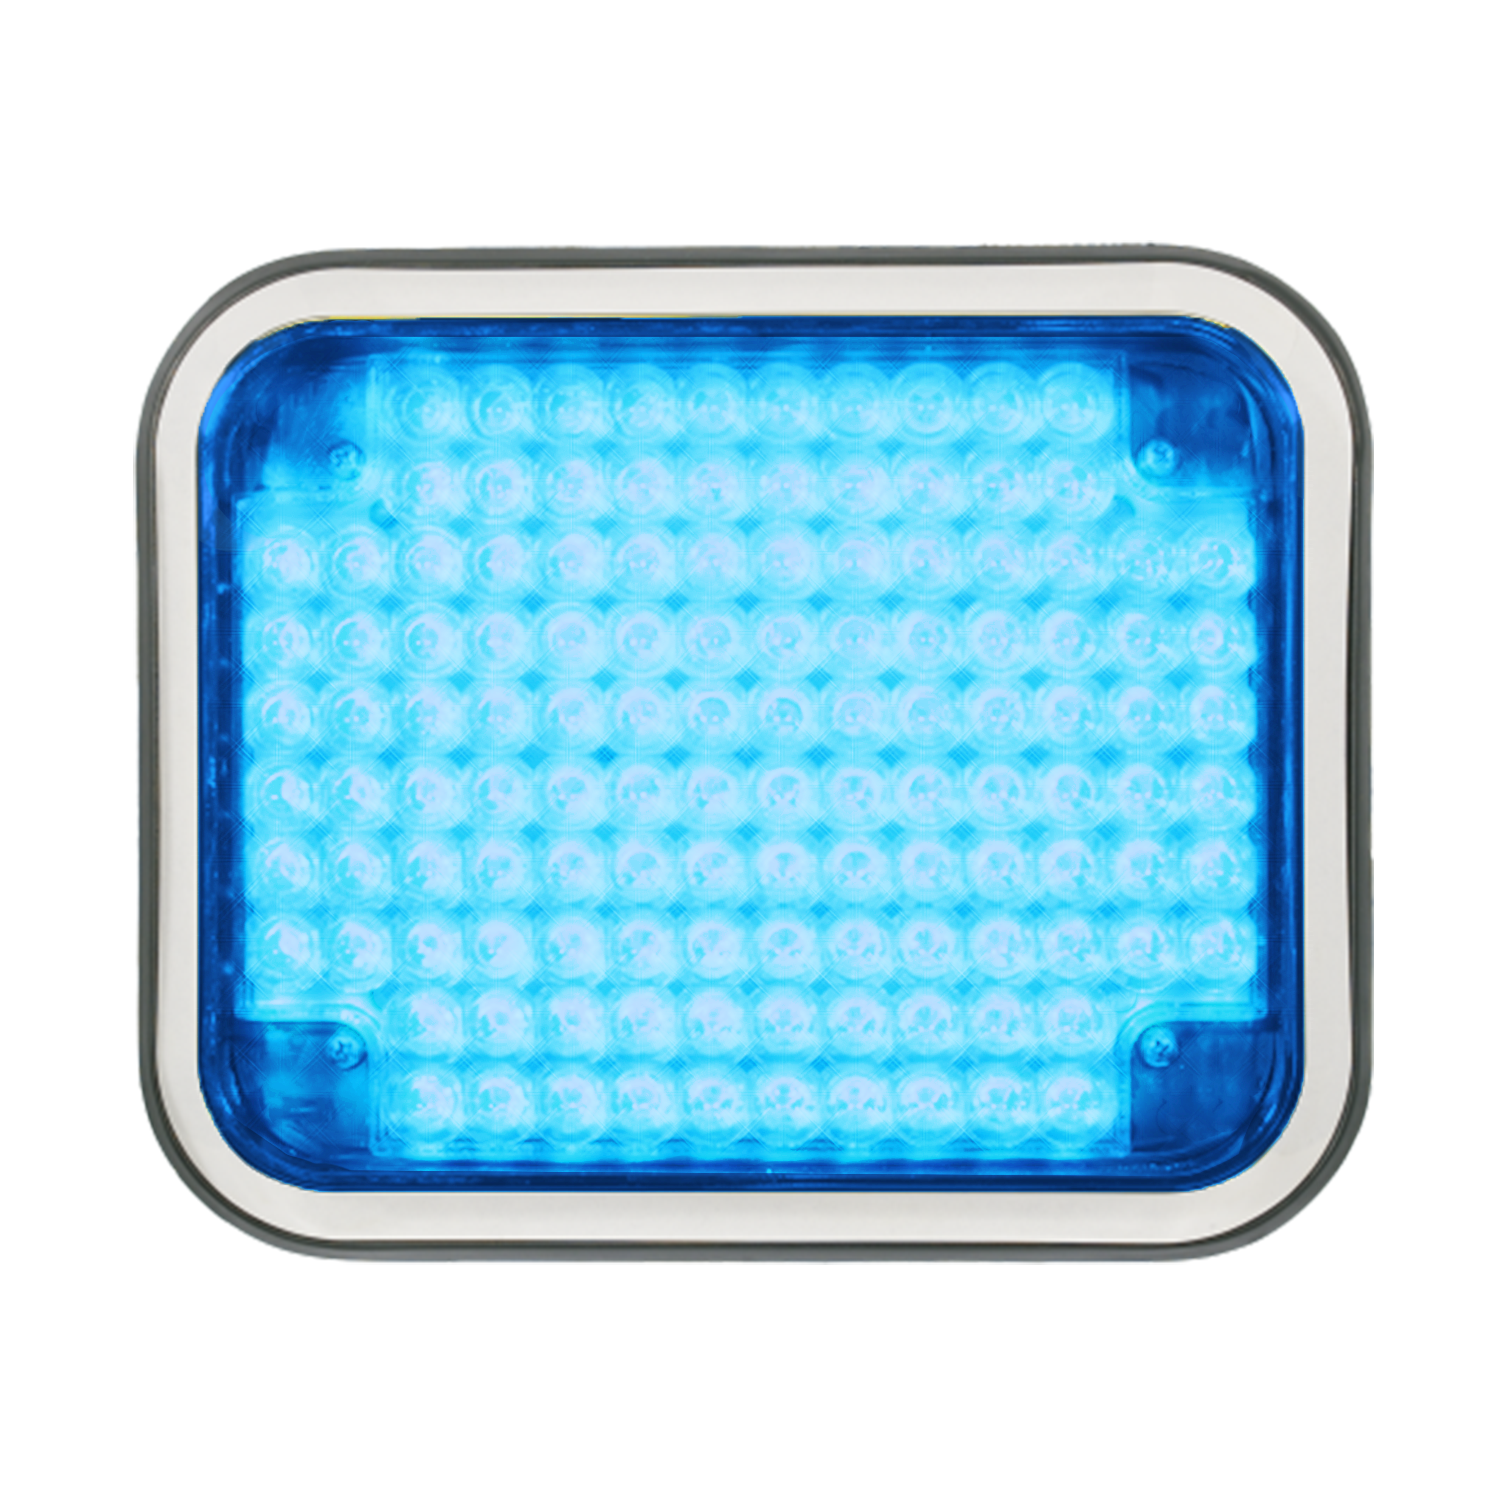 LED Perimeter Lights - Code 3